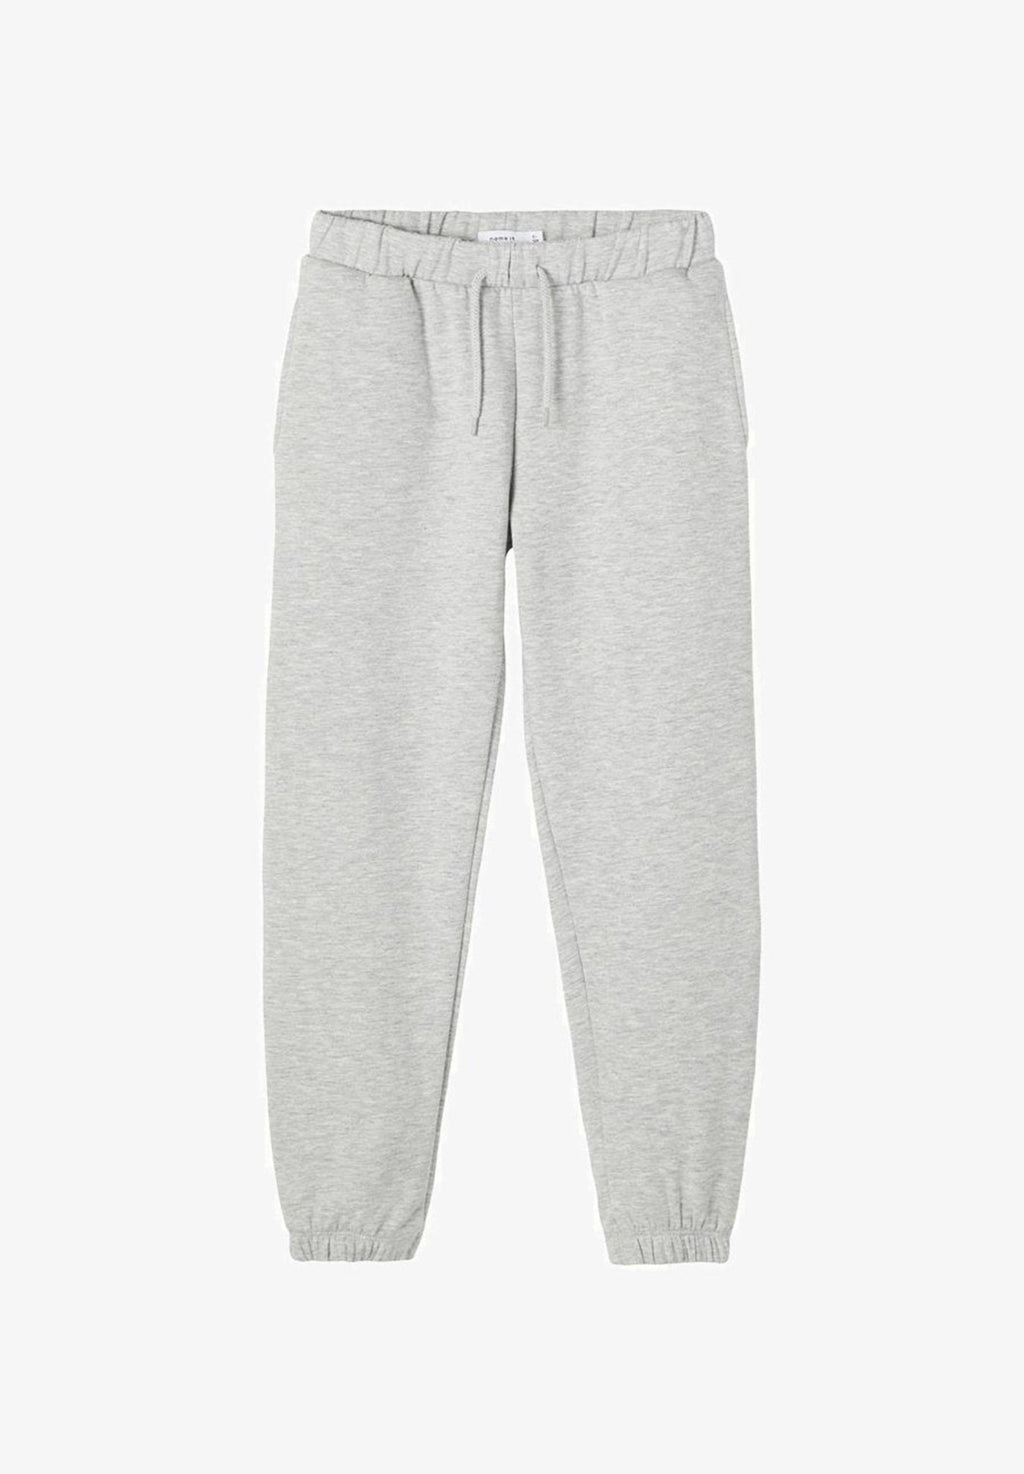 Loose fit Sweatpants - Light grey